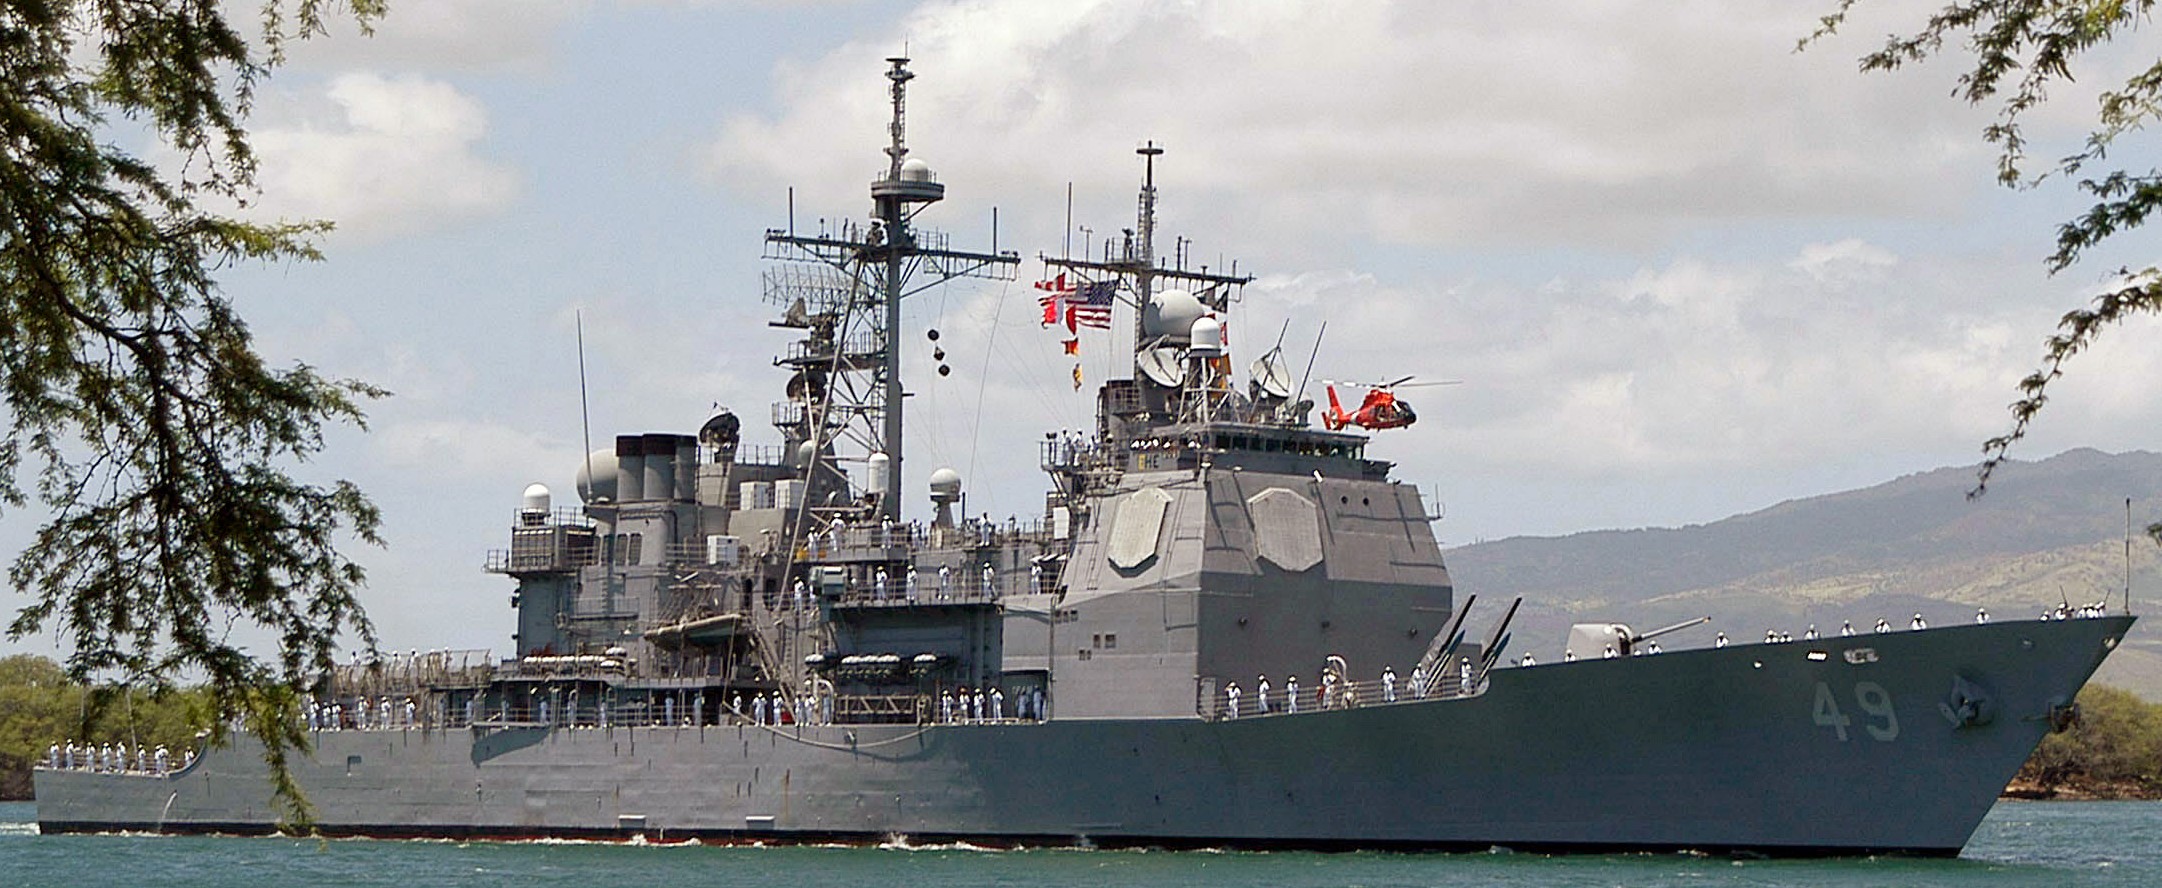 cg-49 uss vincennes ticonderoga class guided missile cruiser aegis us navy pearl harbor hawaii 12